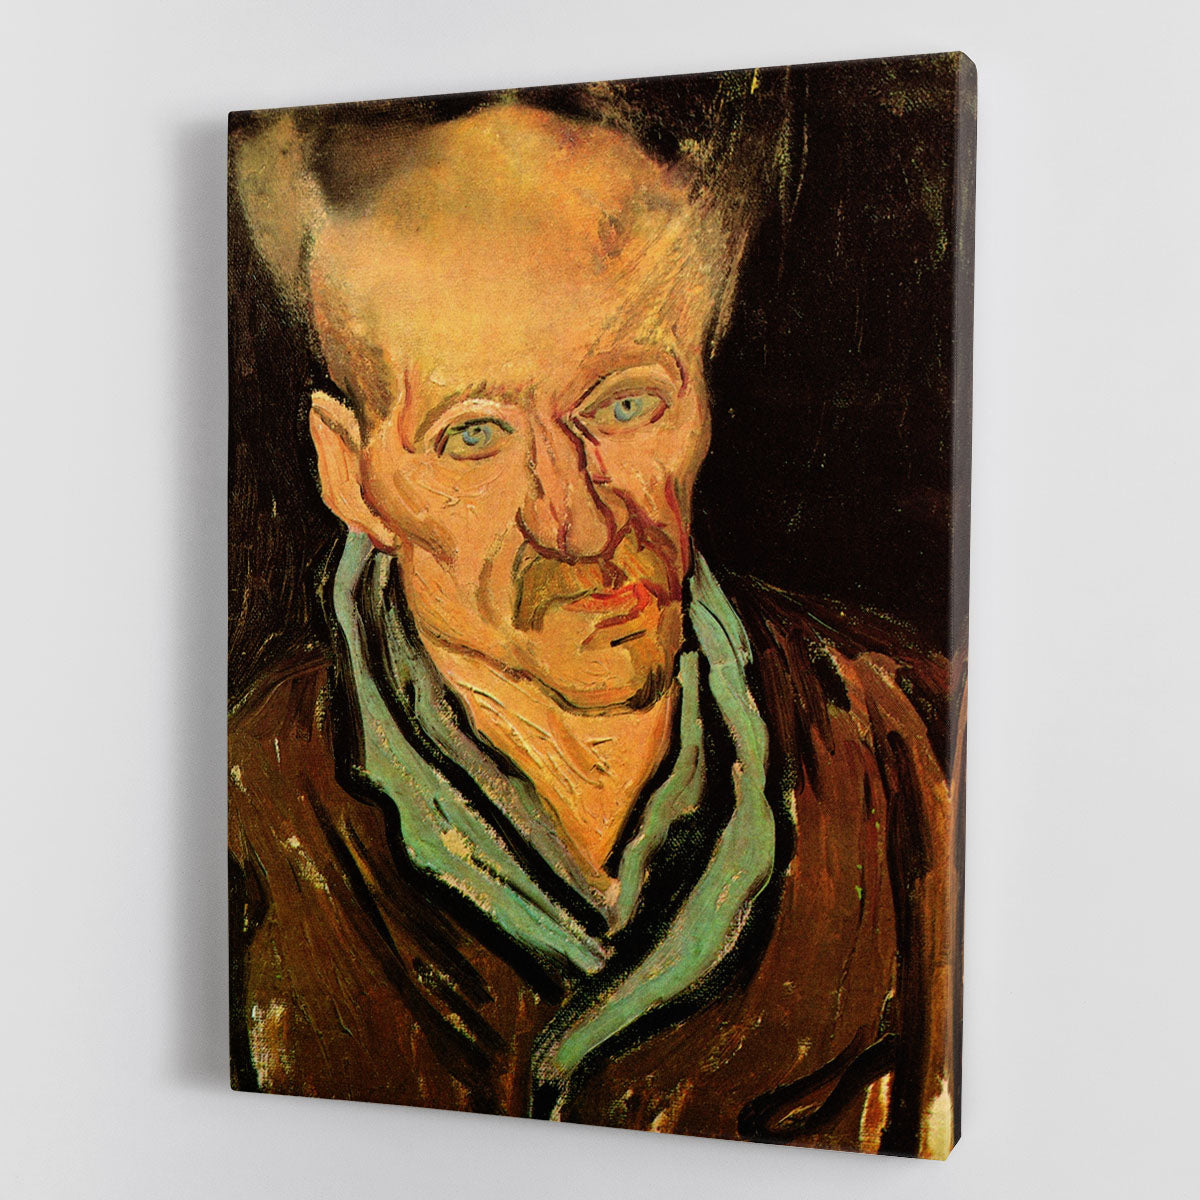 Portrait of a Patient in Saint-Paul Hospital by Van Gogh Canvas Print or Poster - Canvas Art Rocks - 1